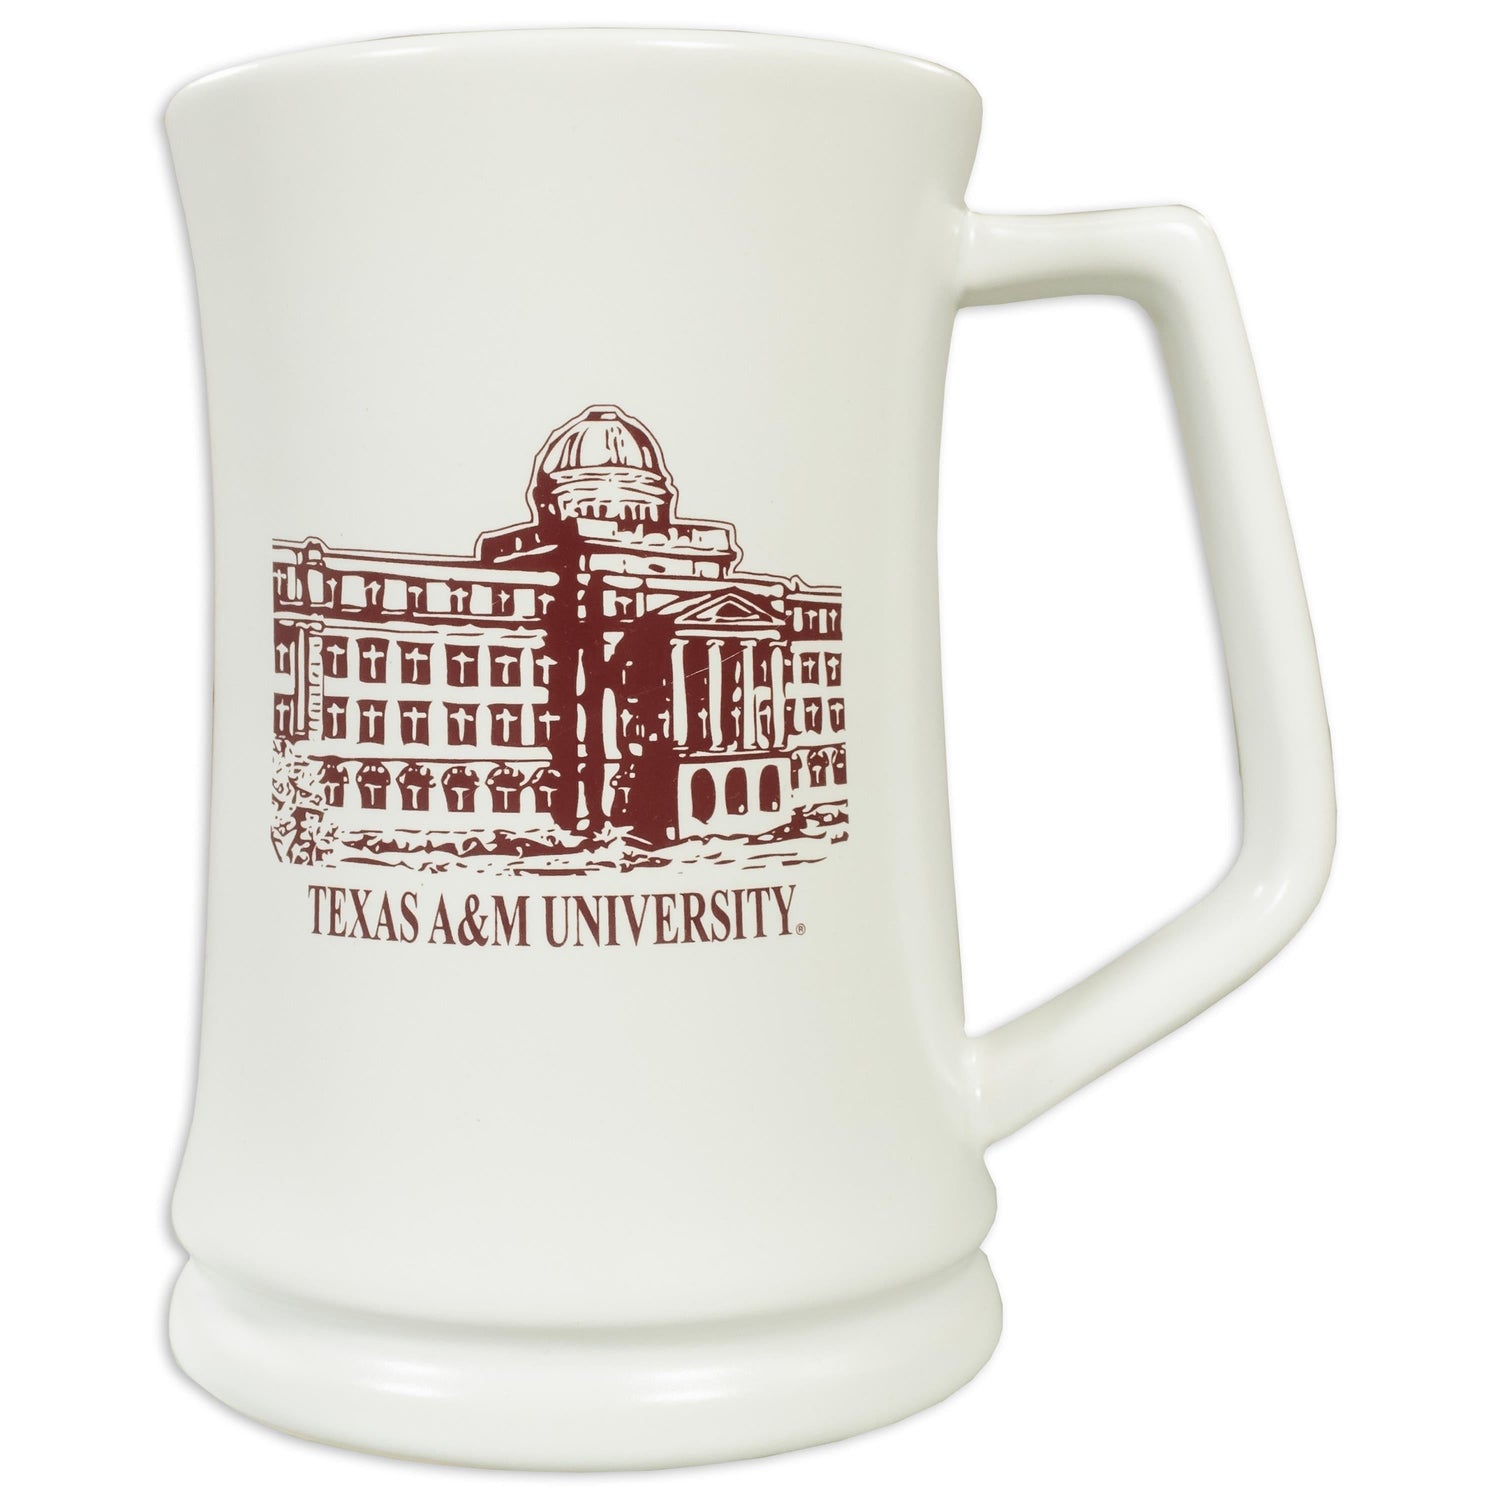 Texas A&M War Hymn & Academic Building White Coffee Mug 28oz